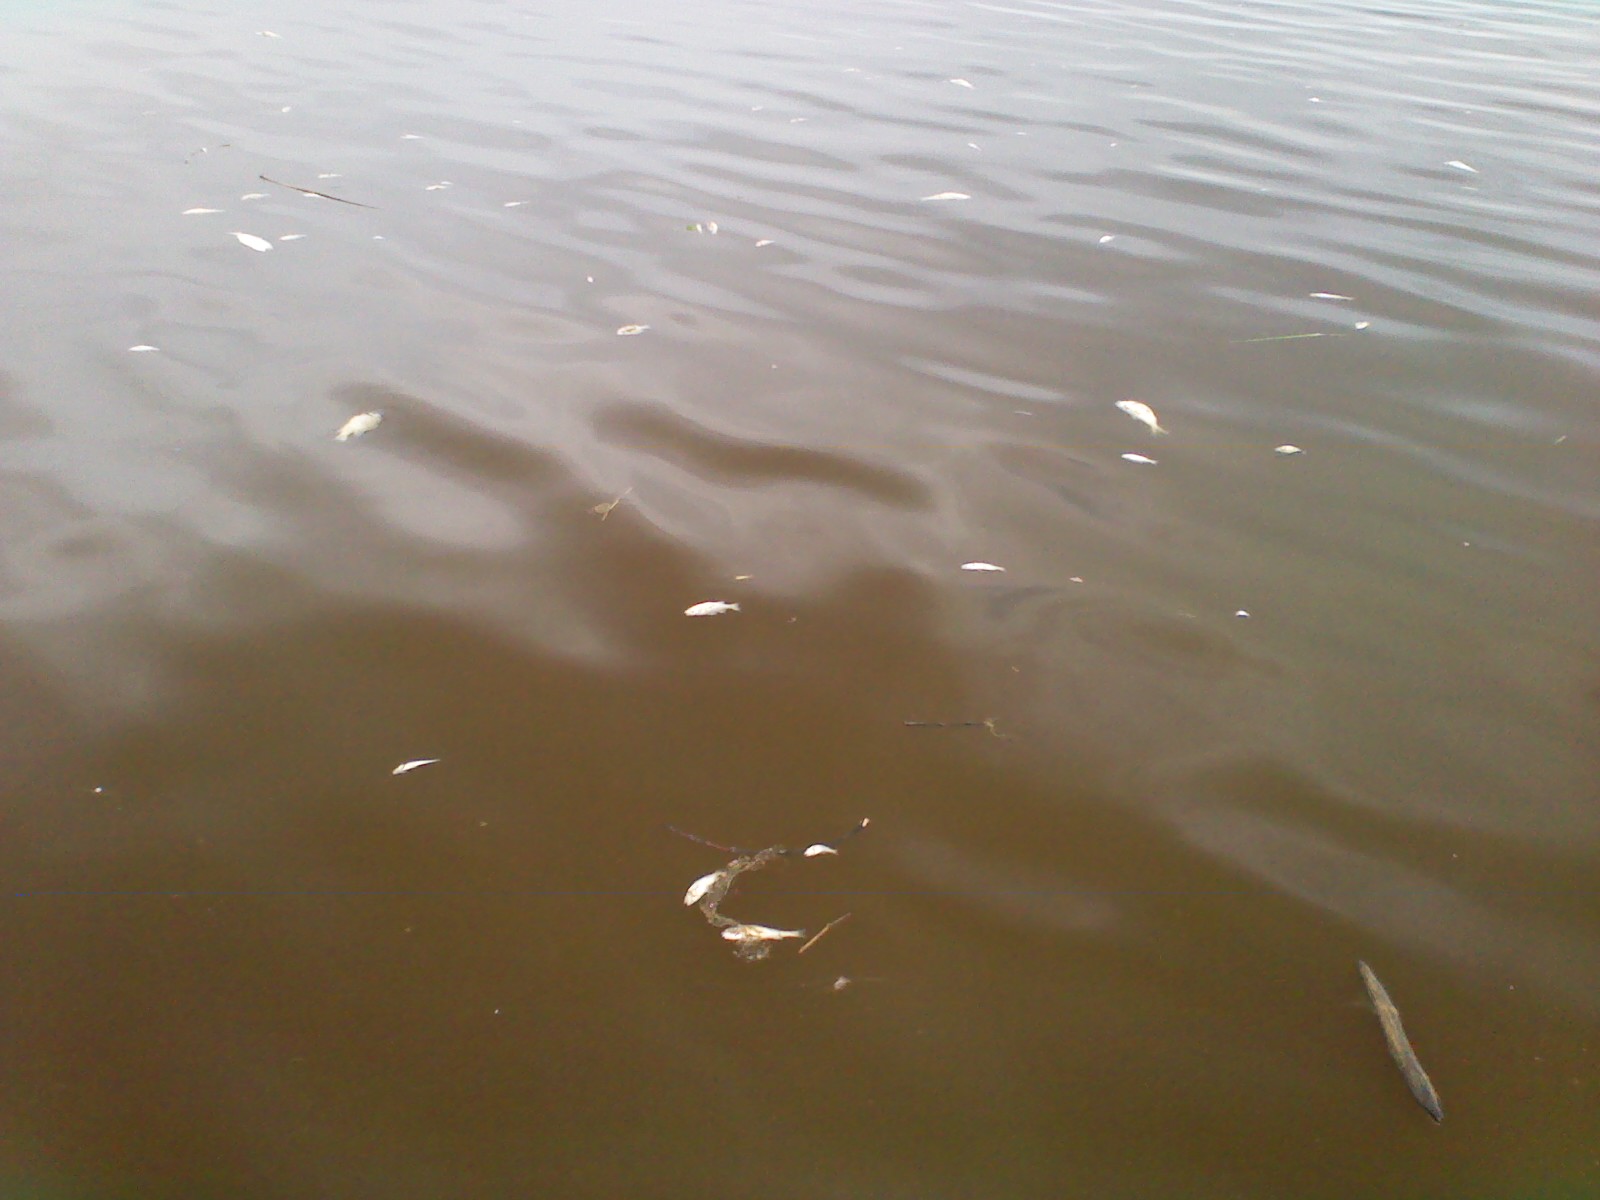 Fish kill in Marley Creek in Anne Arundel County